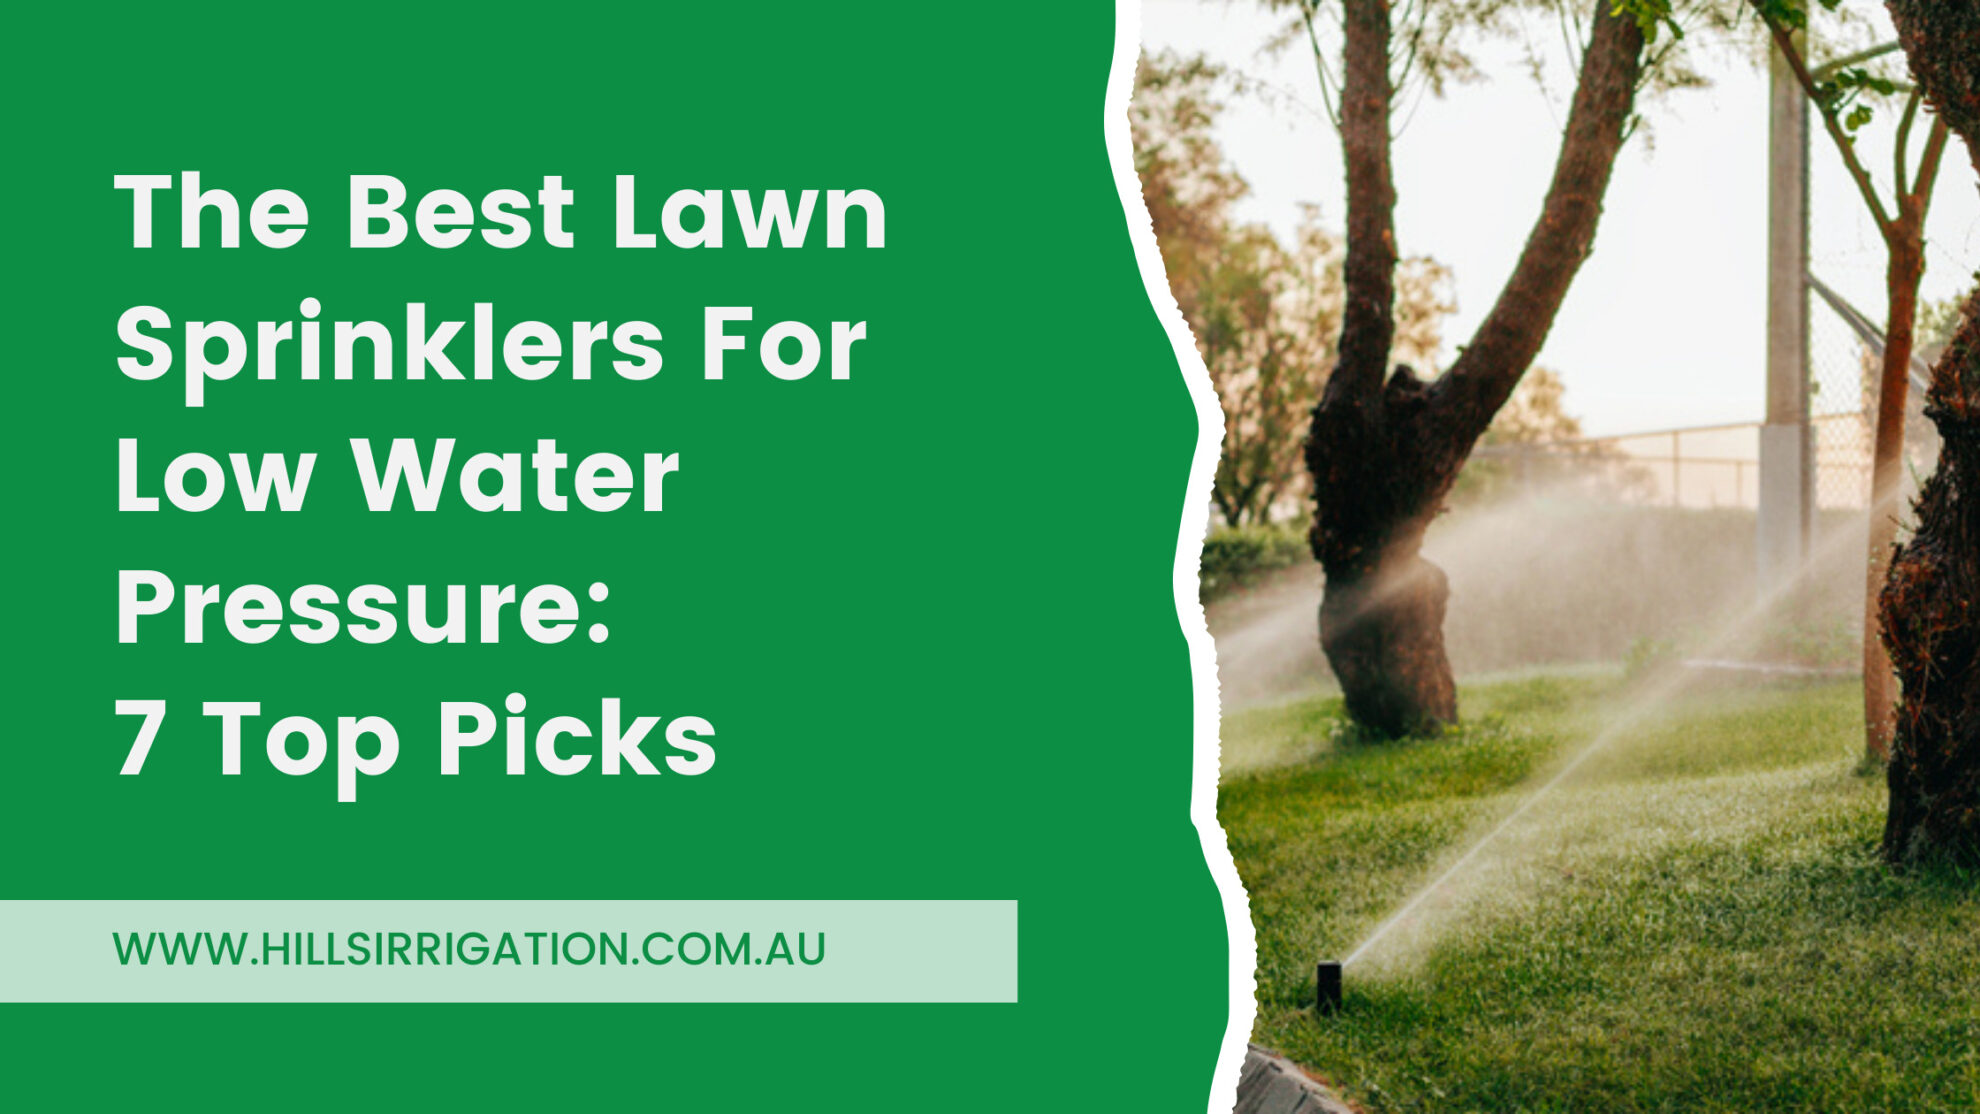 The Best Lawn Sprinklers For Low Water Pressure